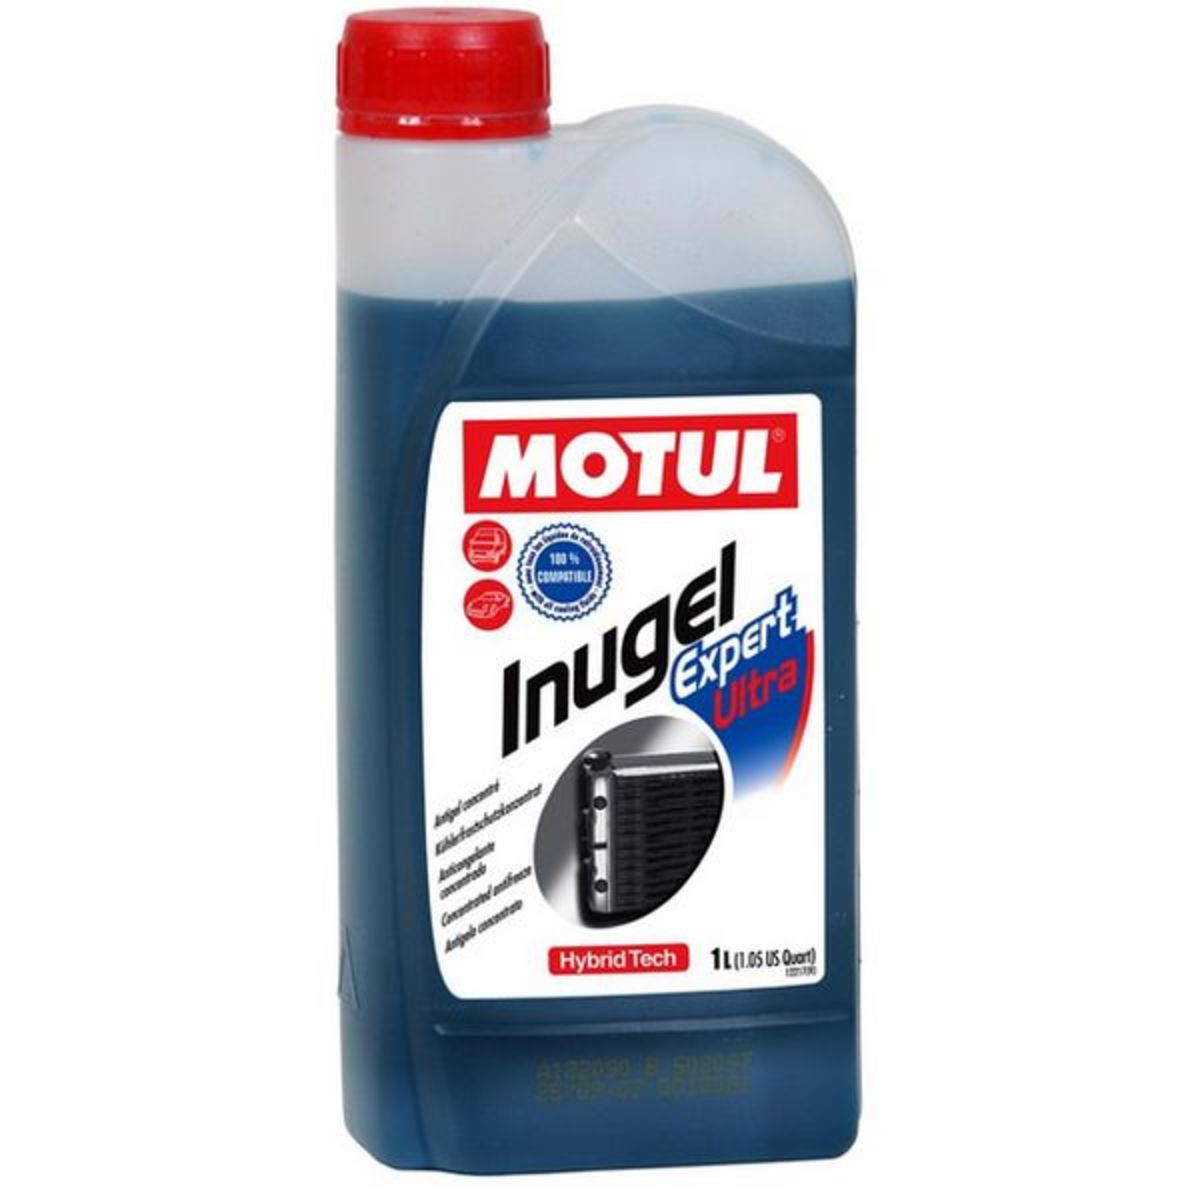 Płyn chłodzący MOTUL Inugel Expert, 1 litr Sklep Inter Cars